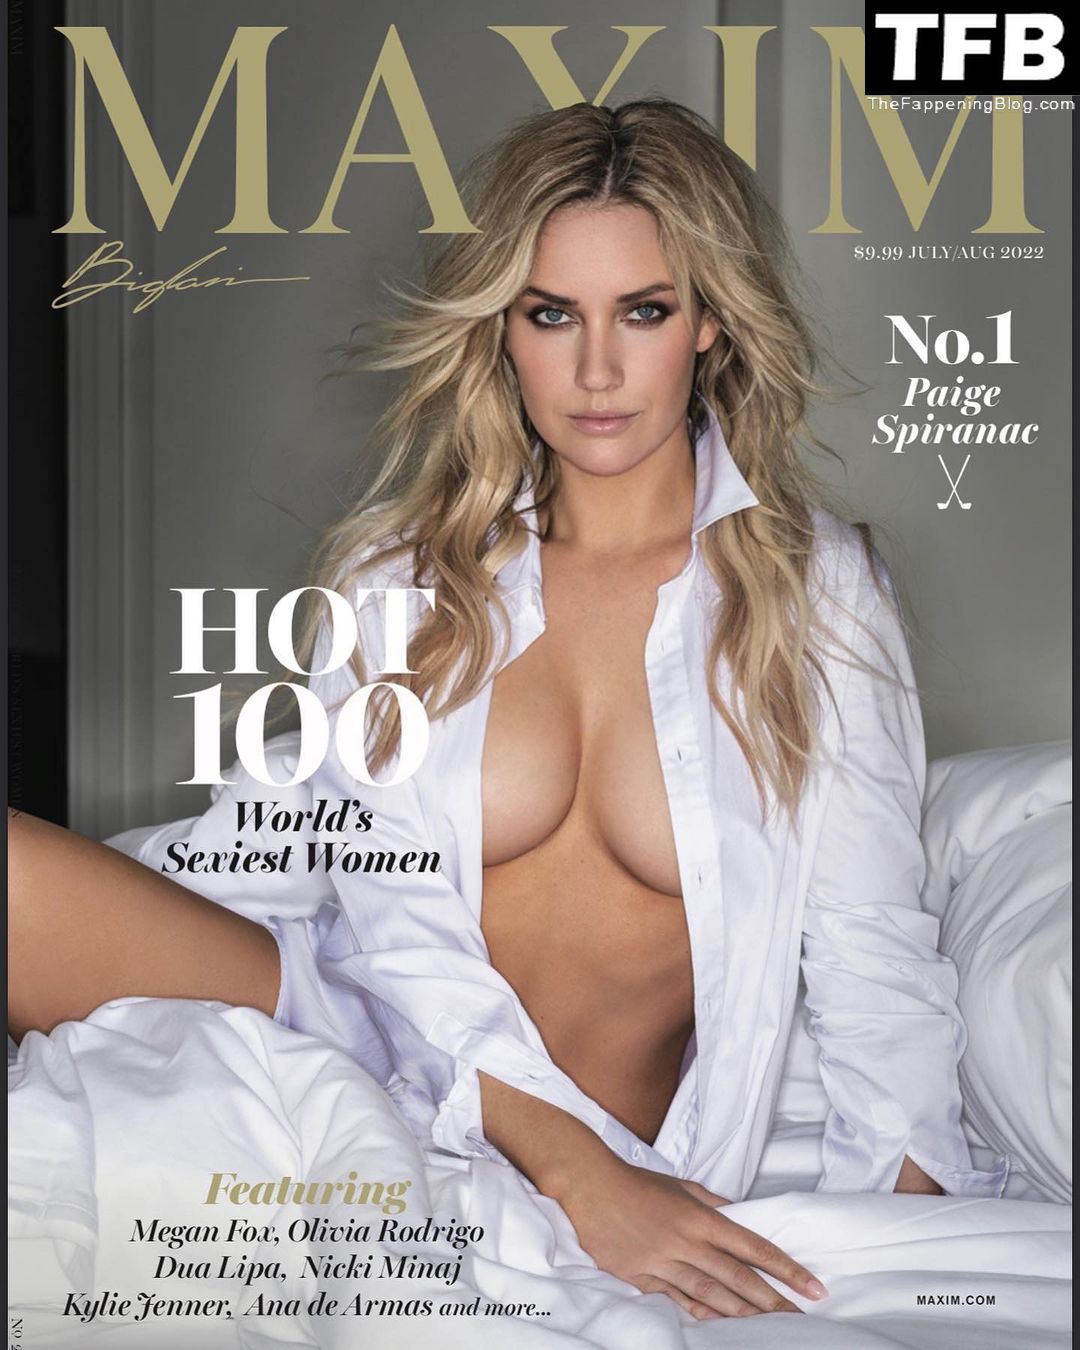 Paige-Spiranac-Sexy-Maxim-Magazine-4-thefappeningblog.com_.jpg